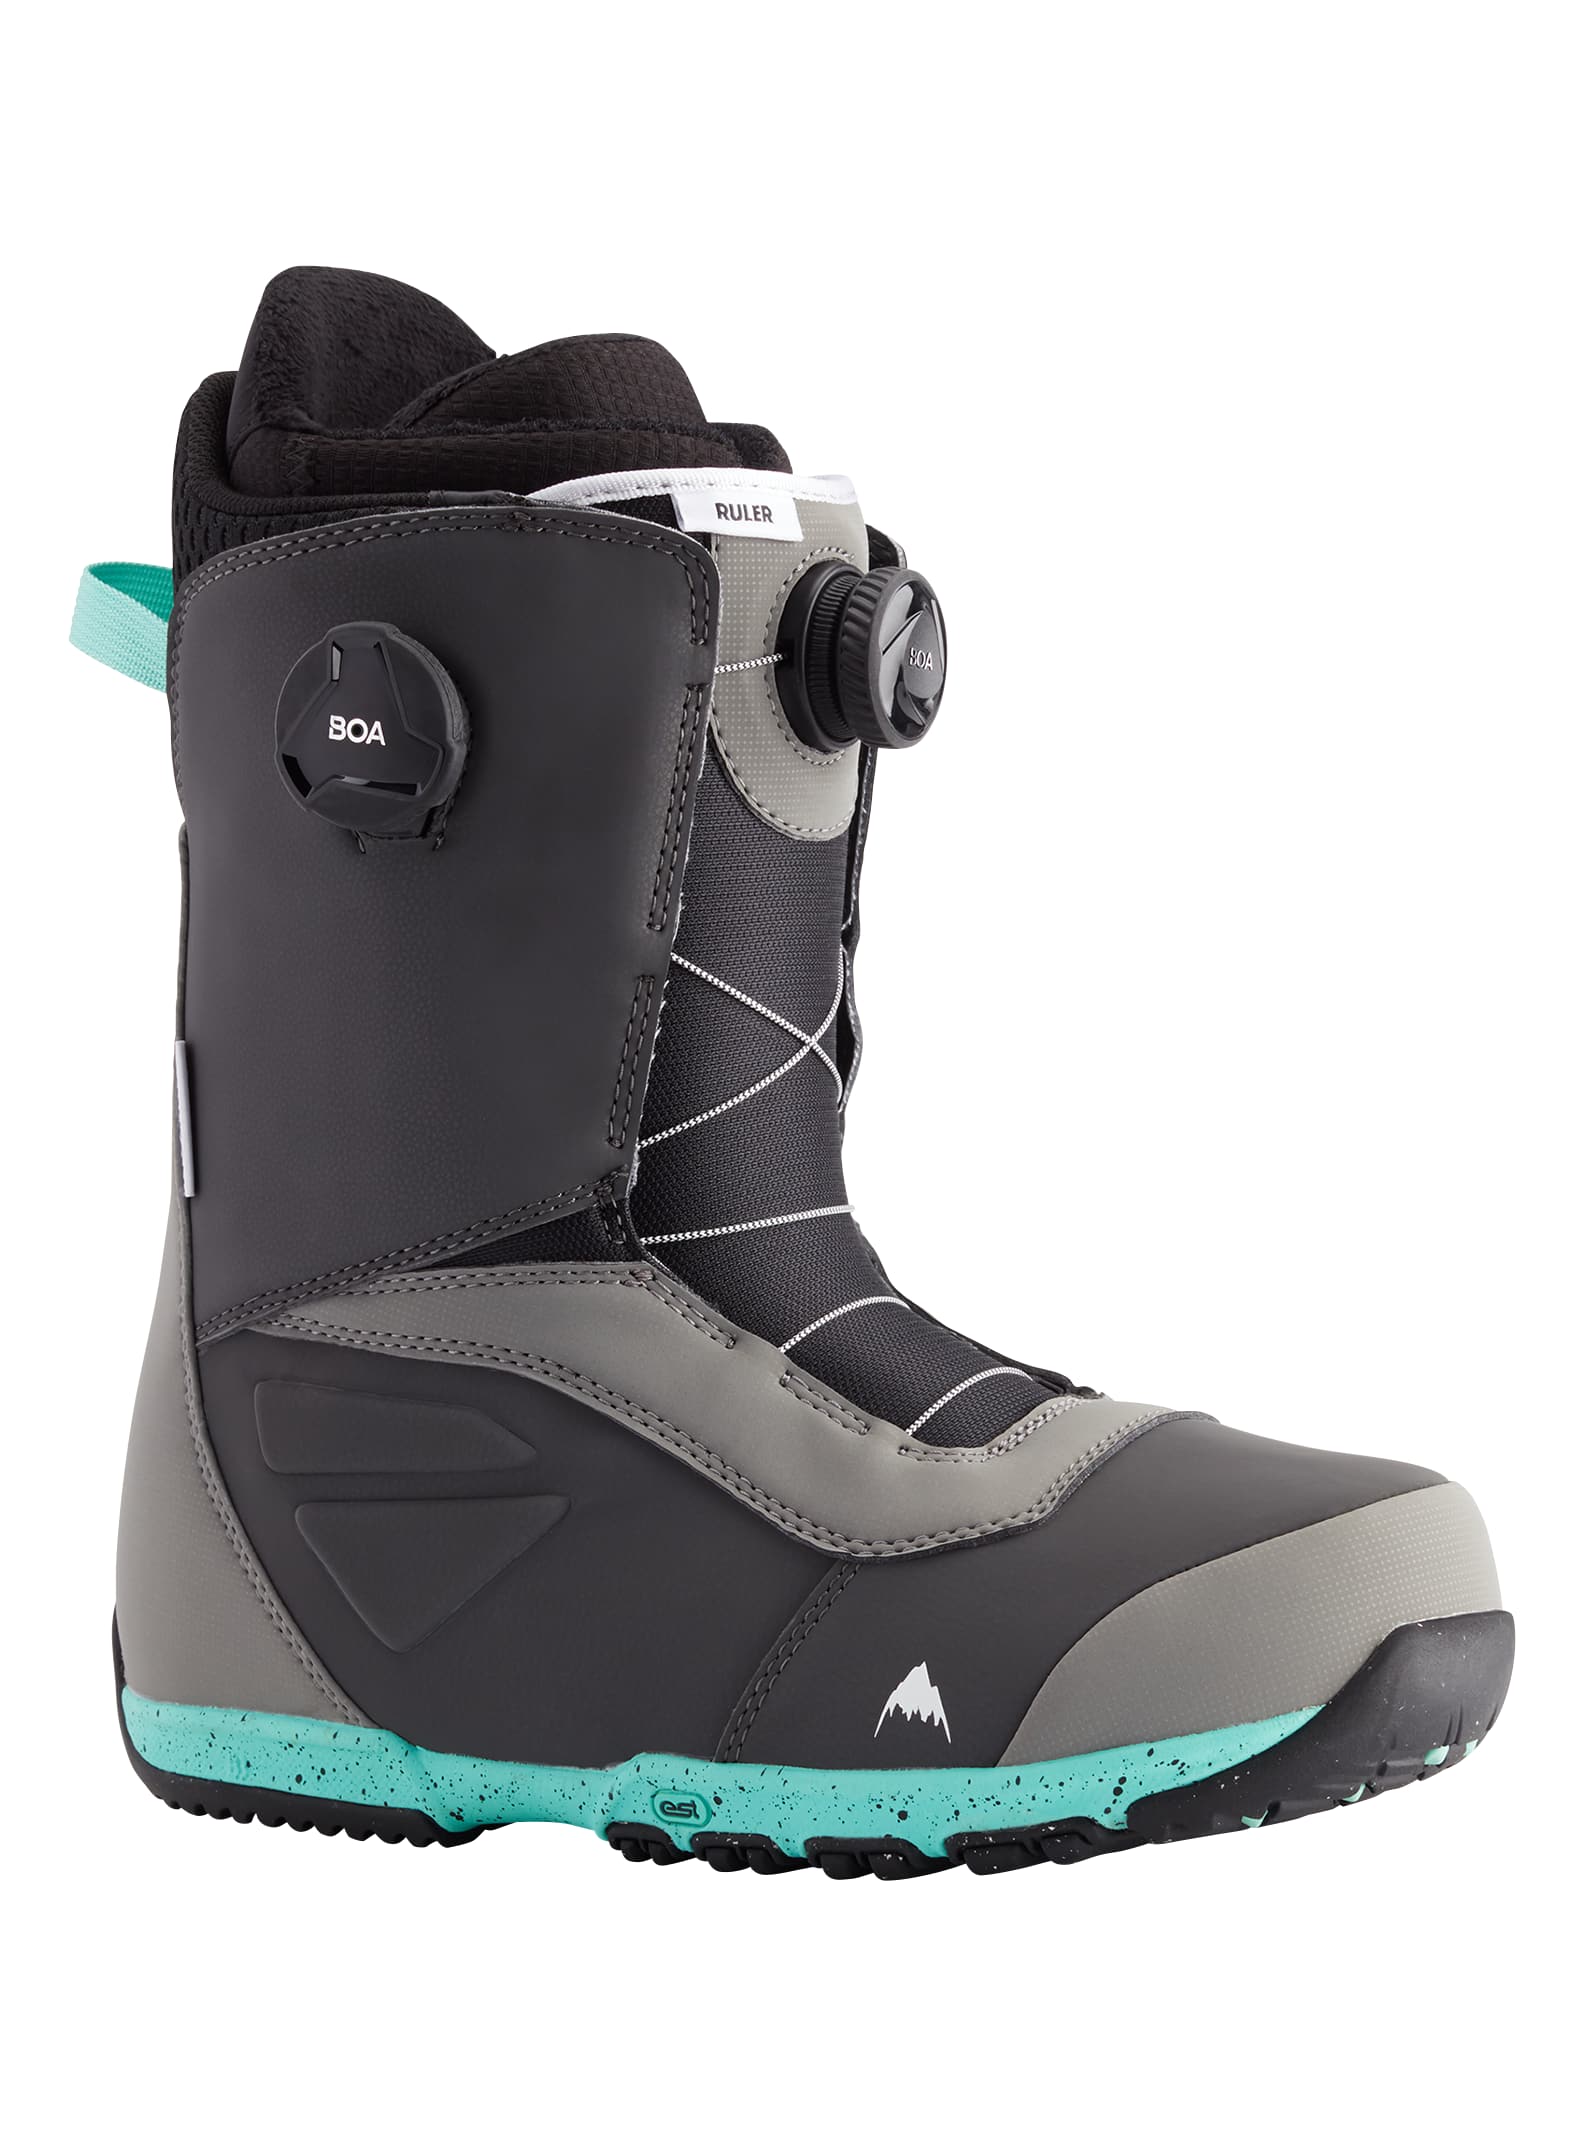 Burton - Boots de snowboard Ruler BOA® homme | Burton.com Hiver 2021 FR